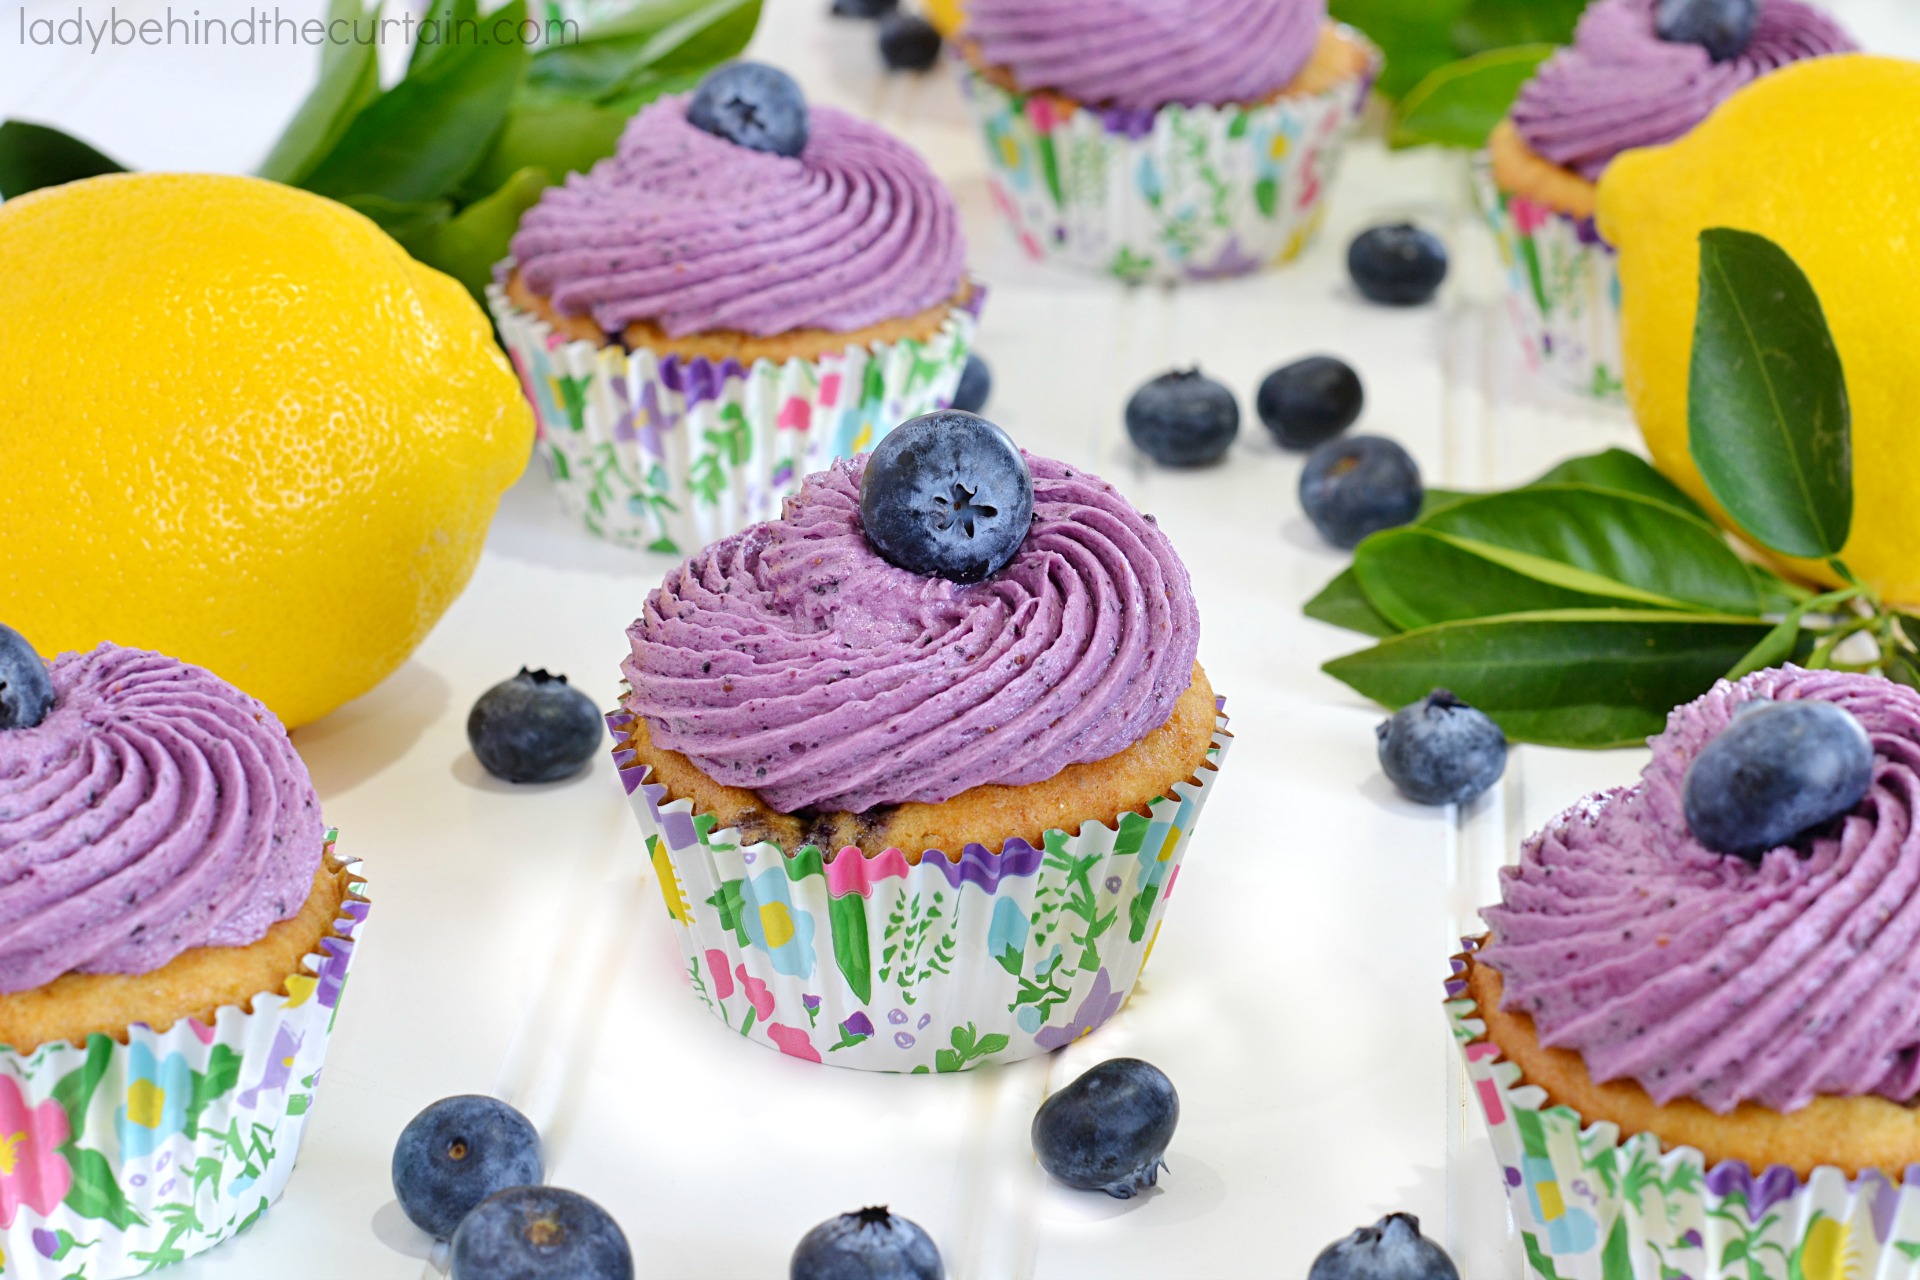 Semi Homemade Lemon Blueberry Swirl Cupcakes